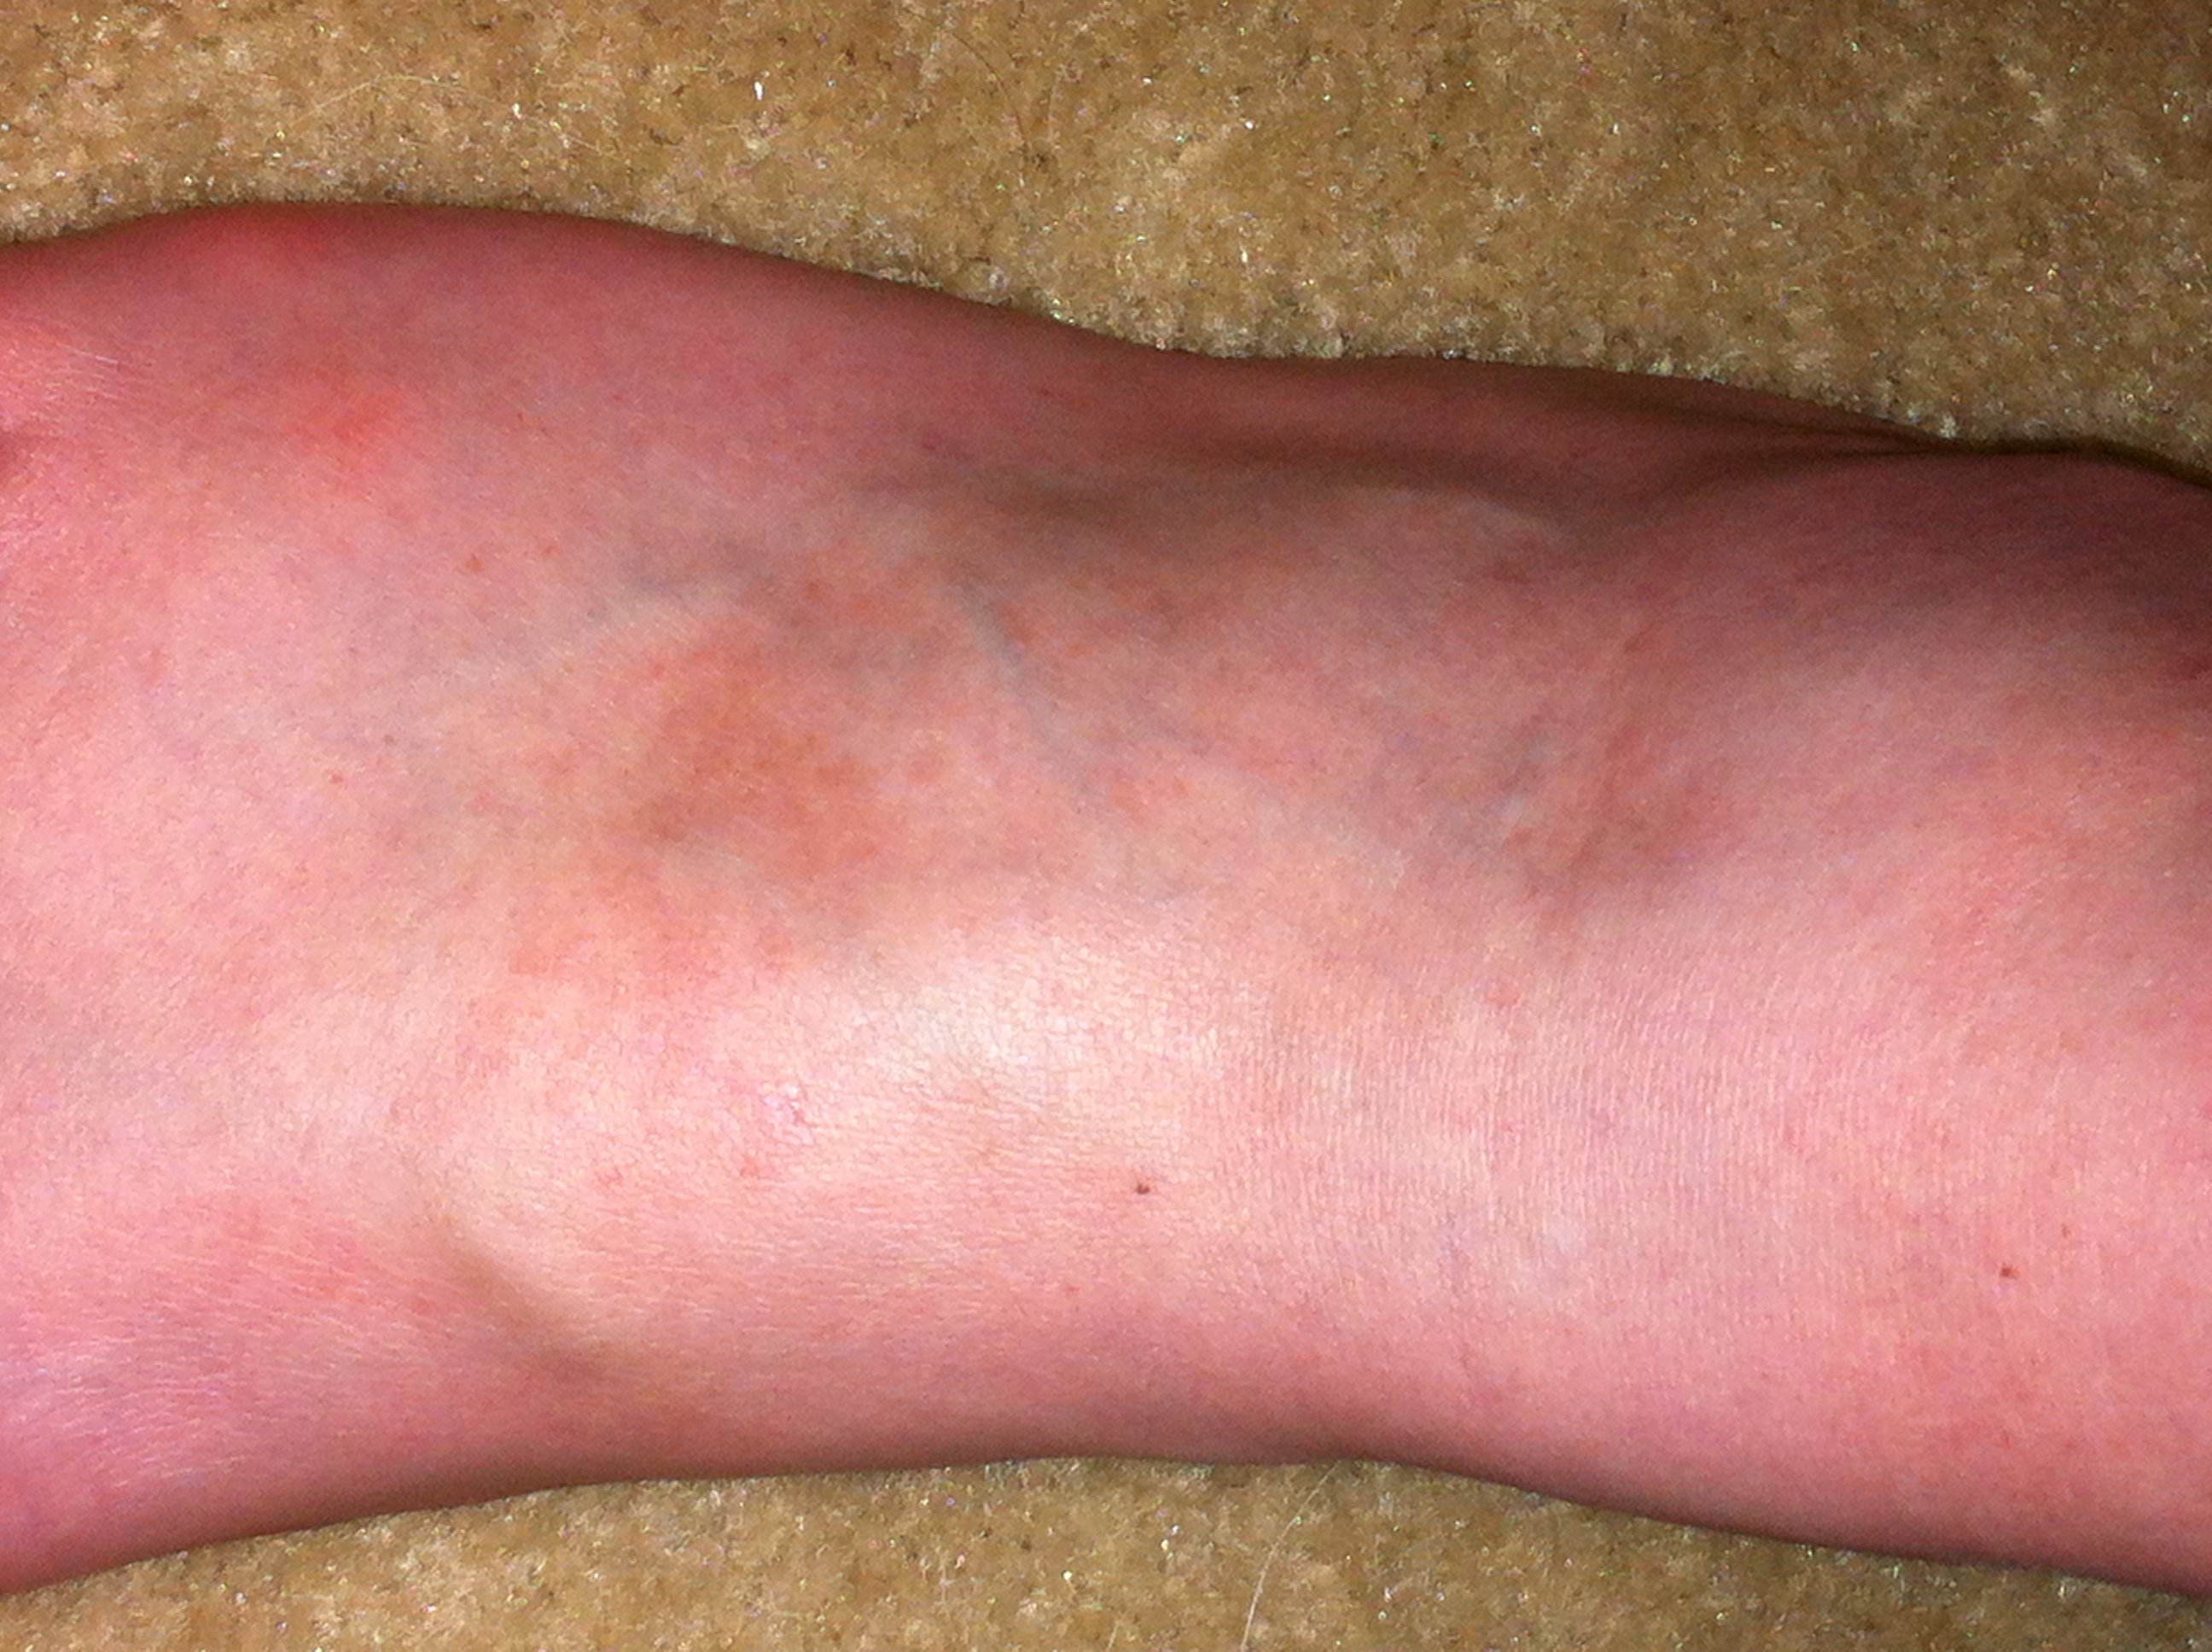 rashes on the feet